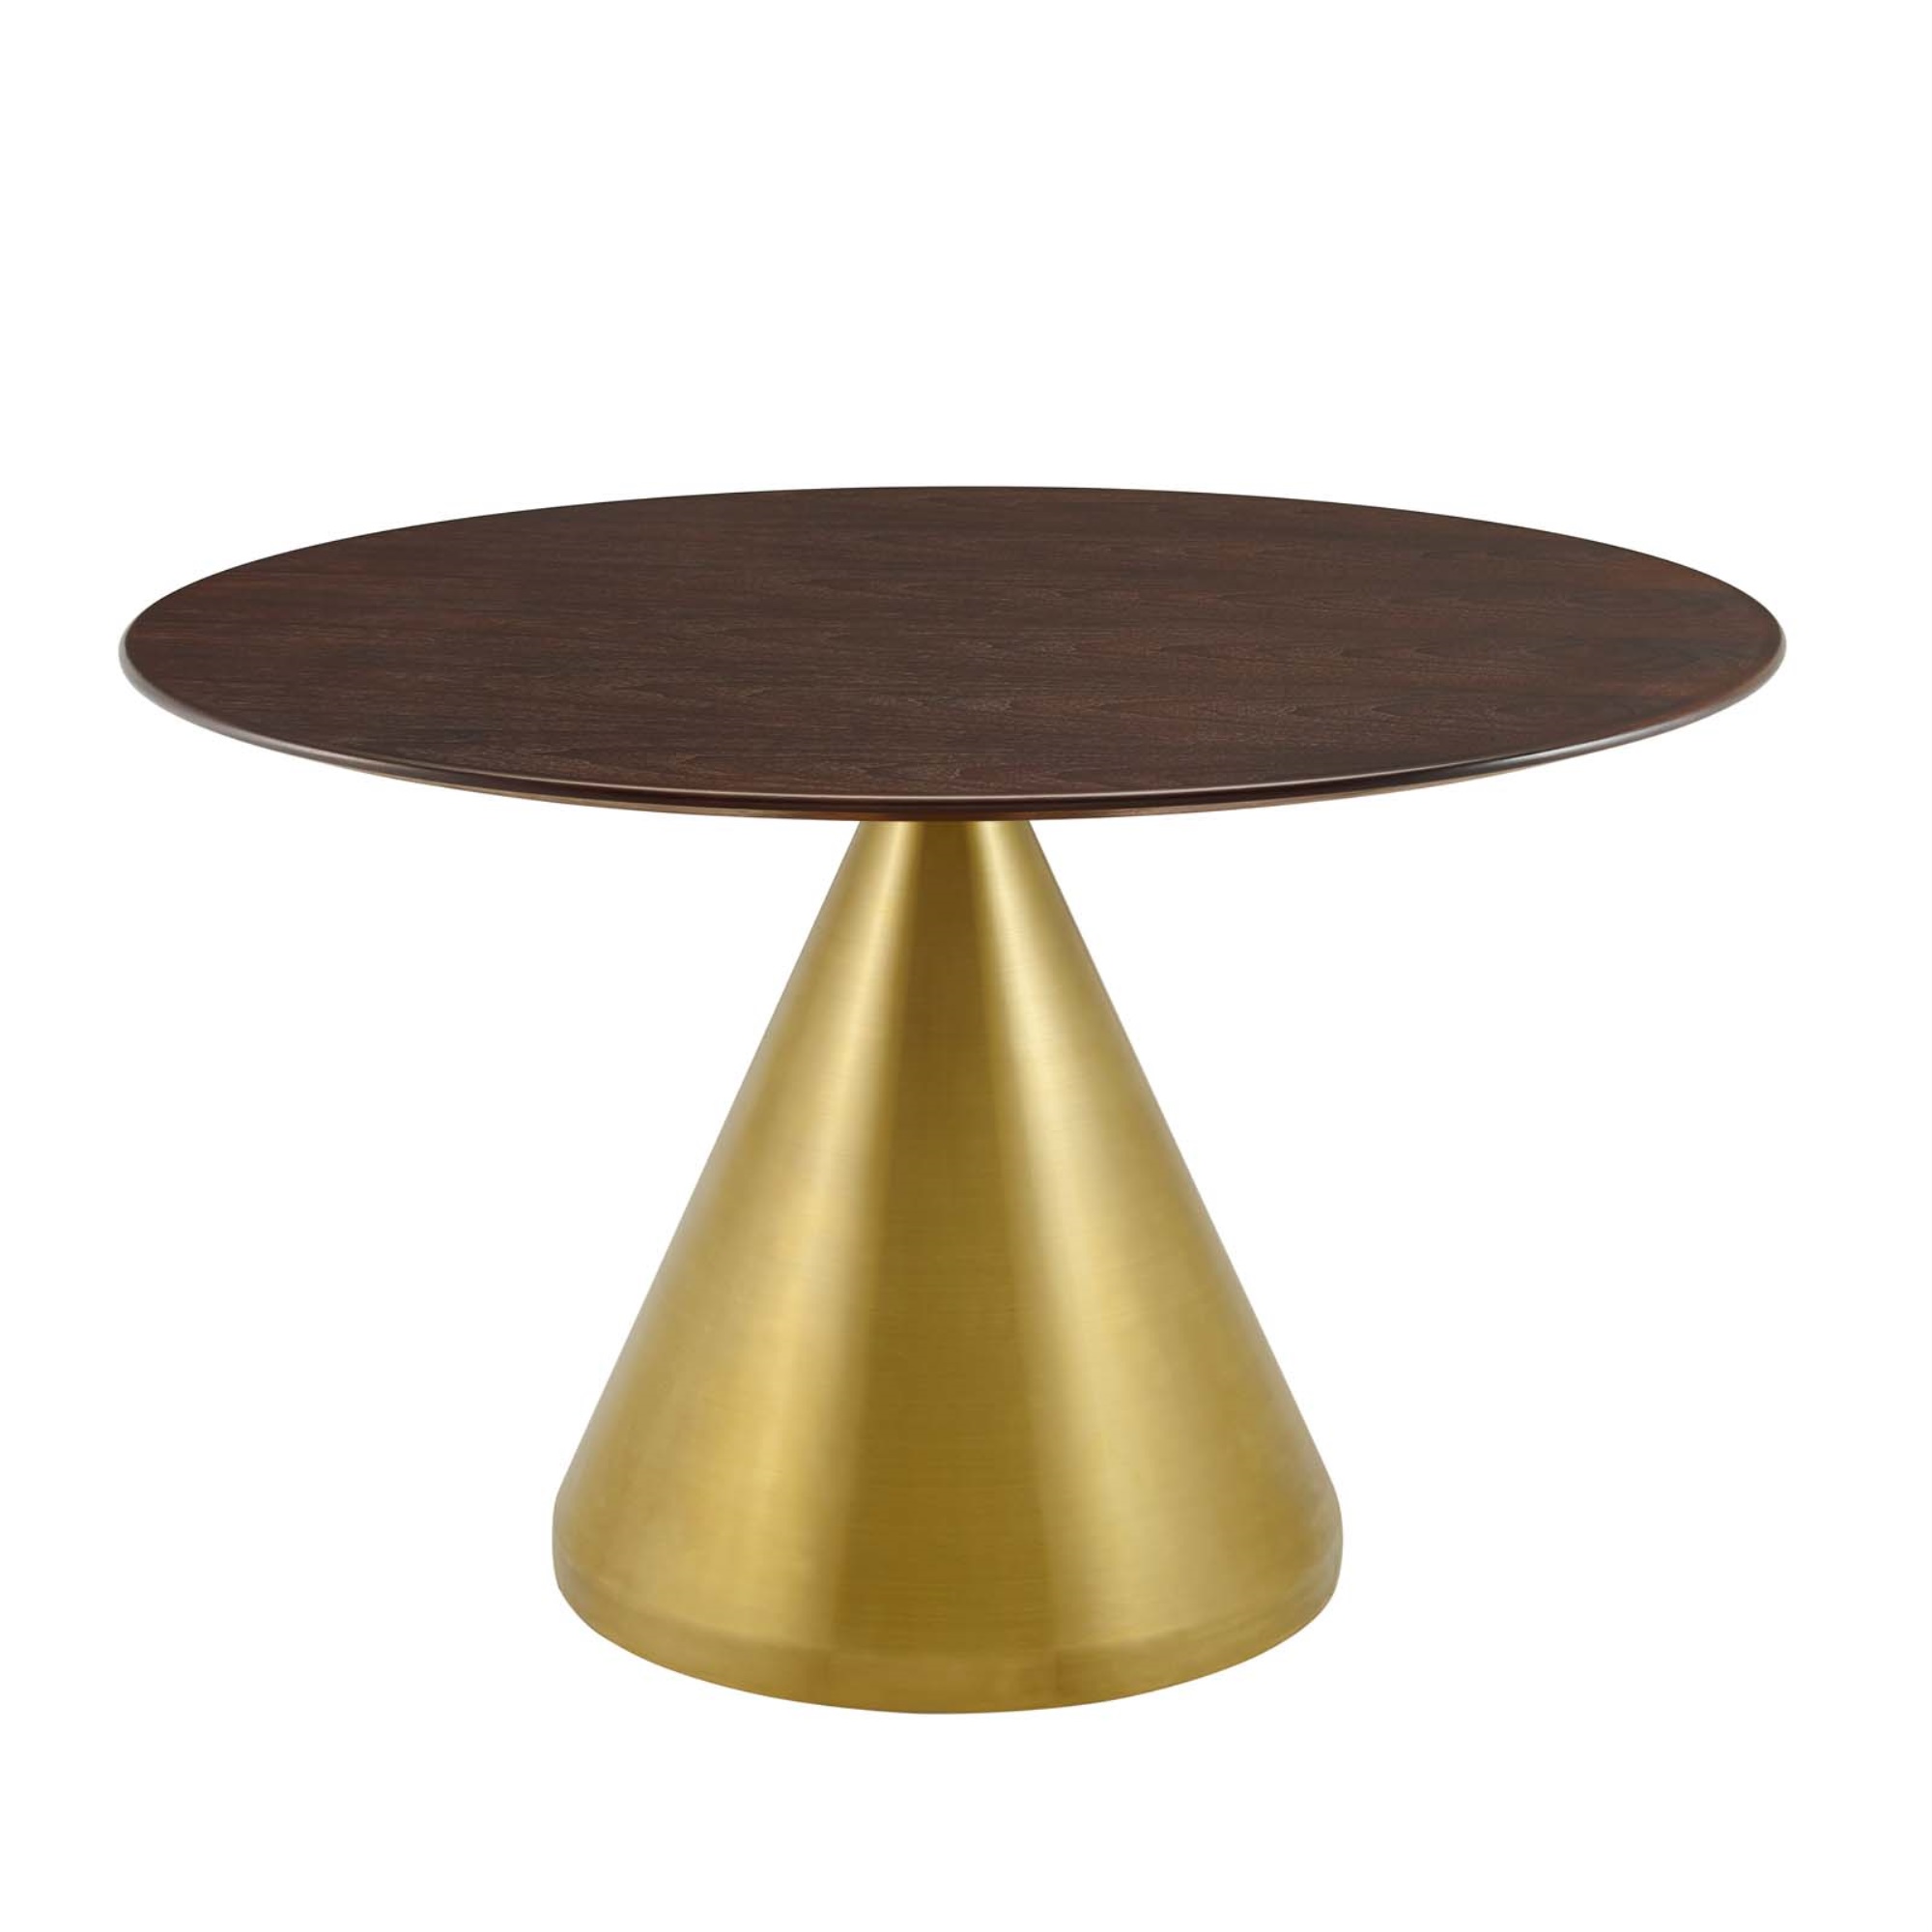 Ergode Tupelo 47" Dining Table - Modern Style, Mid-Century Charm, Gold Metal Base, Wood Grain Veneer, Easy to Clean, Non-Markin